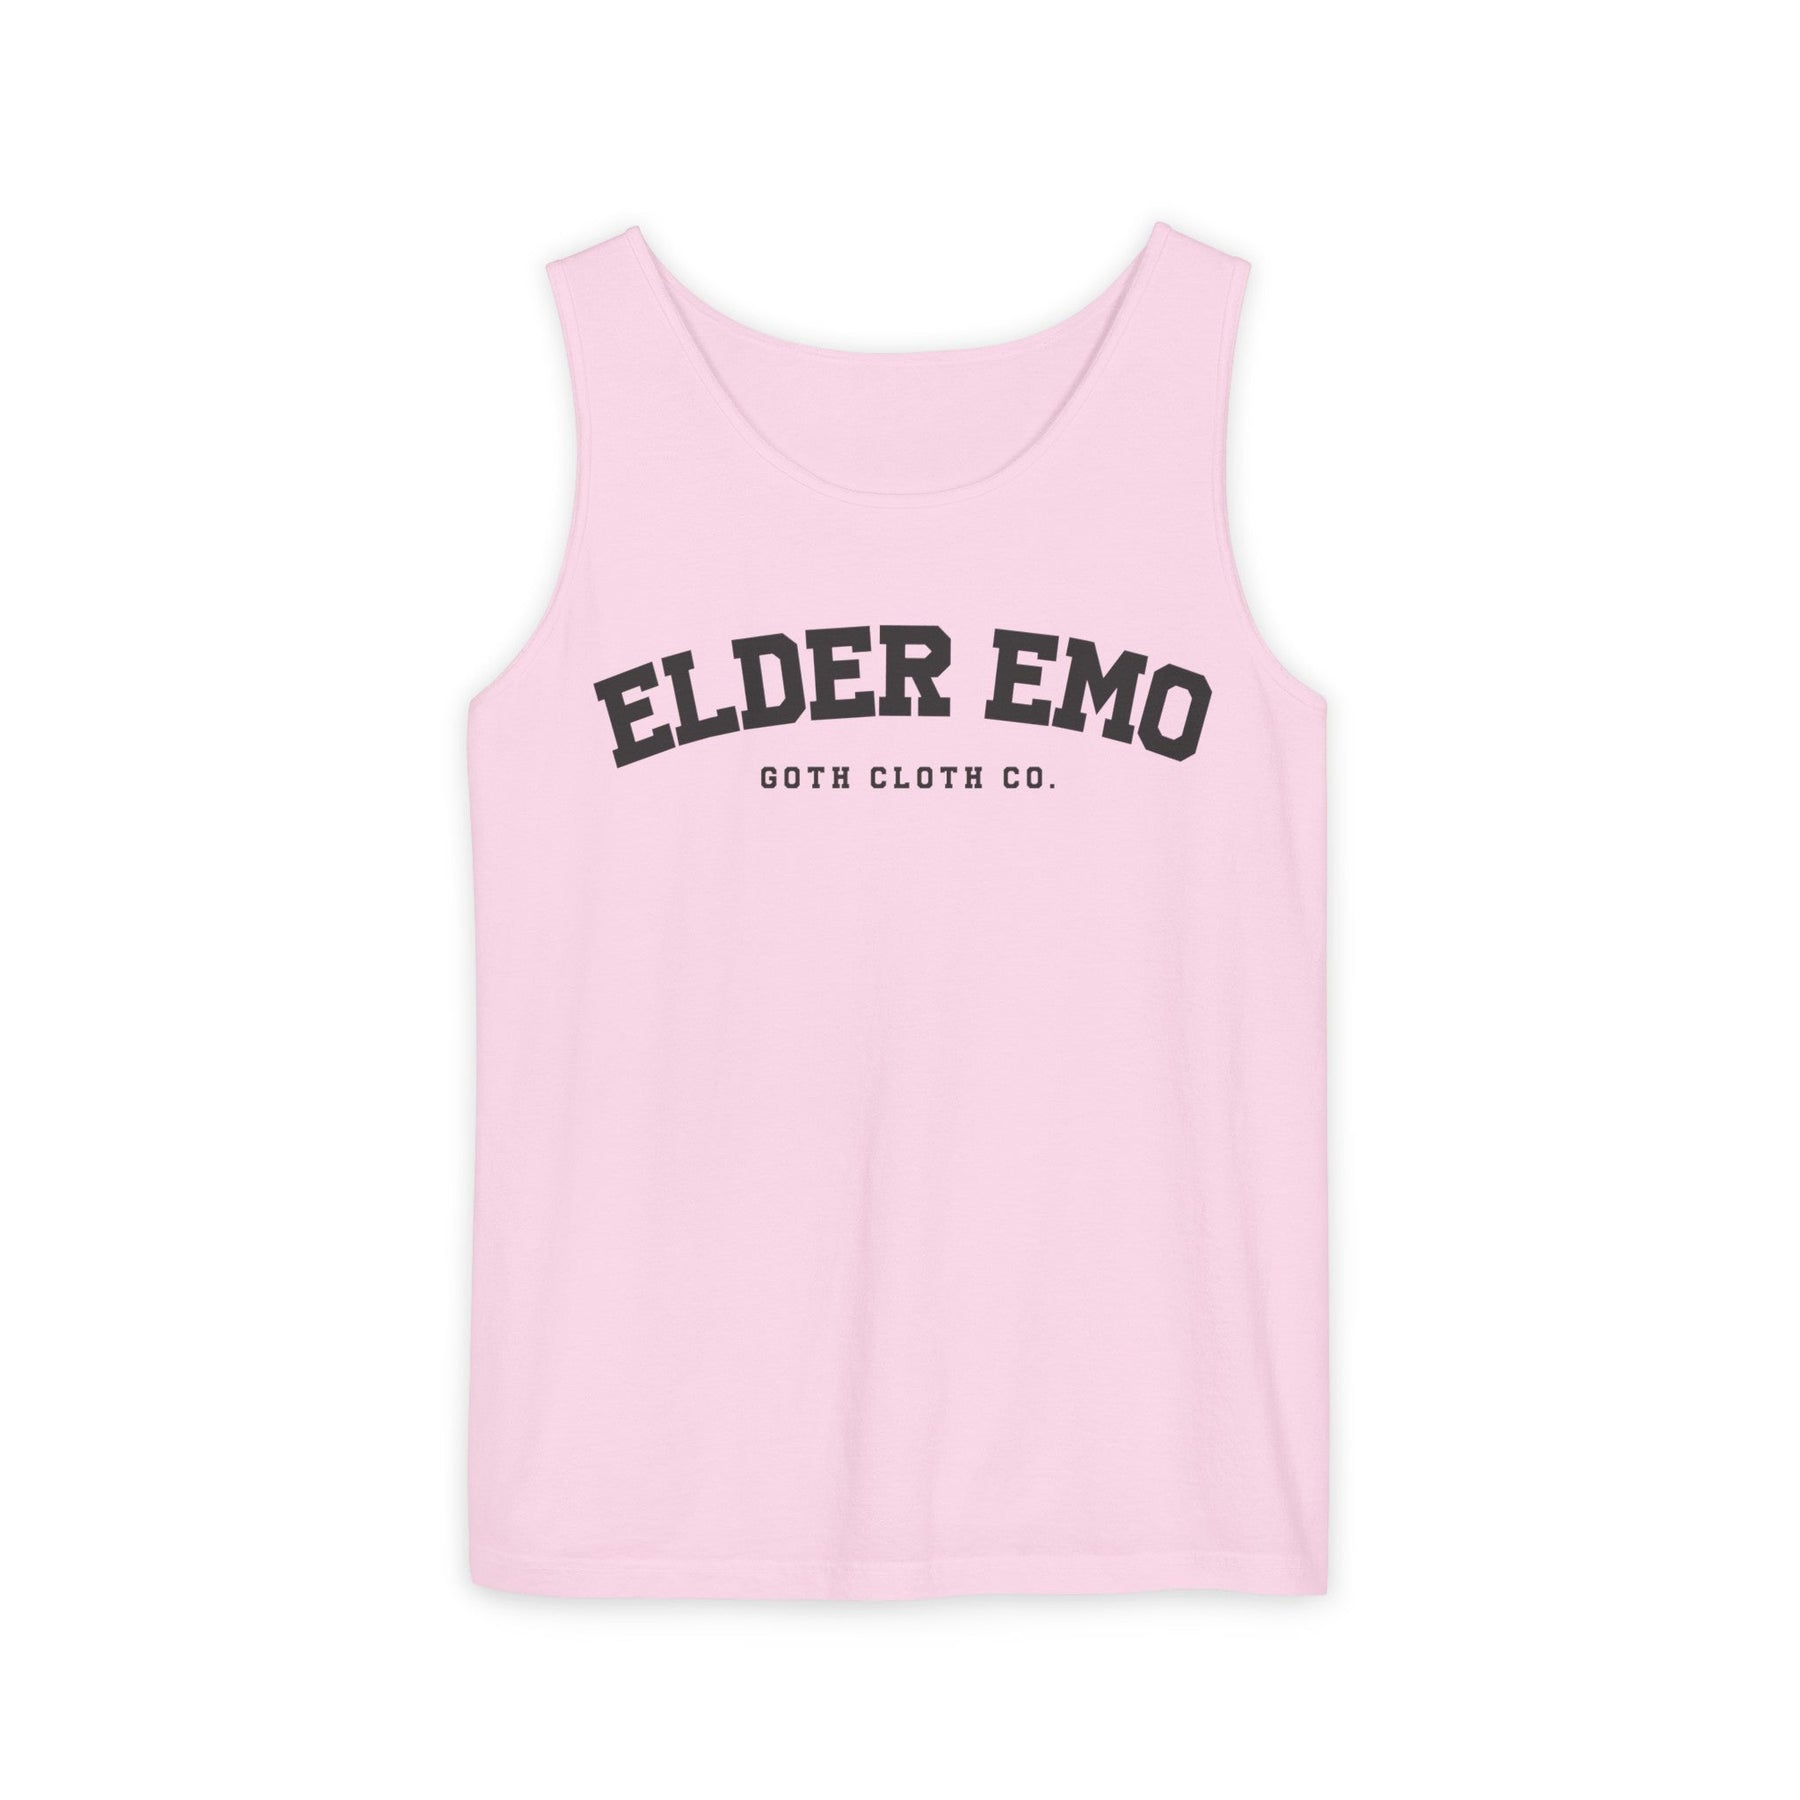 Elder Emo College Unisex Tank Top - Goth Cloth Co.Tank Top83043753119974055532